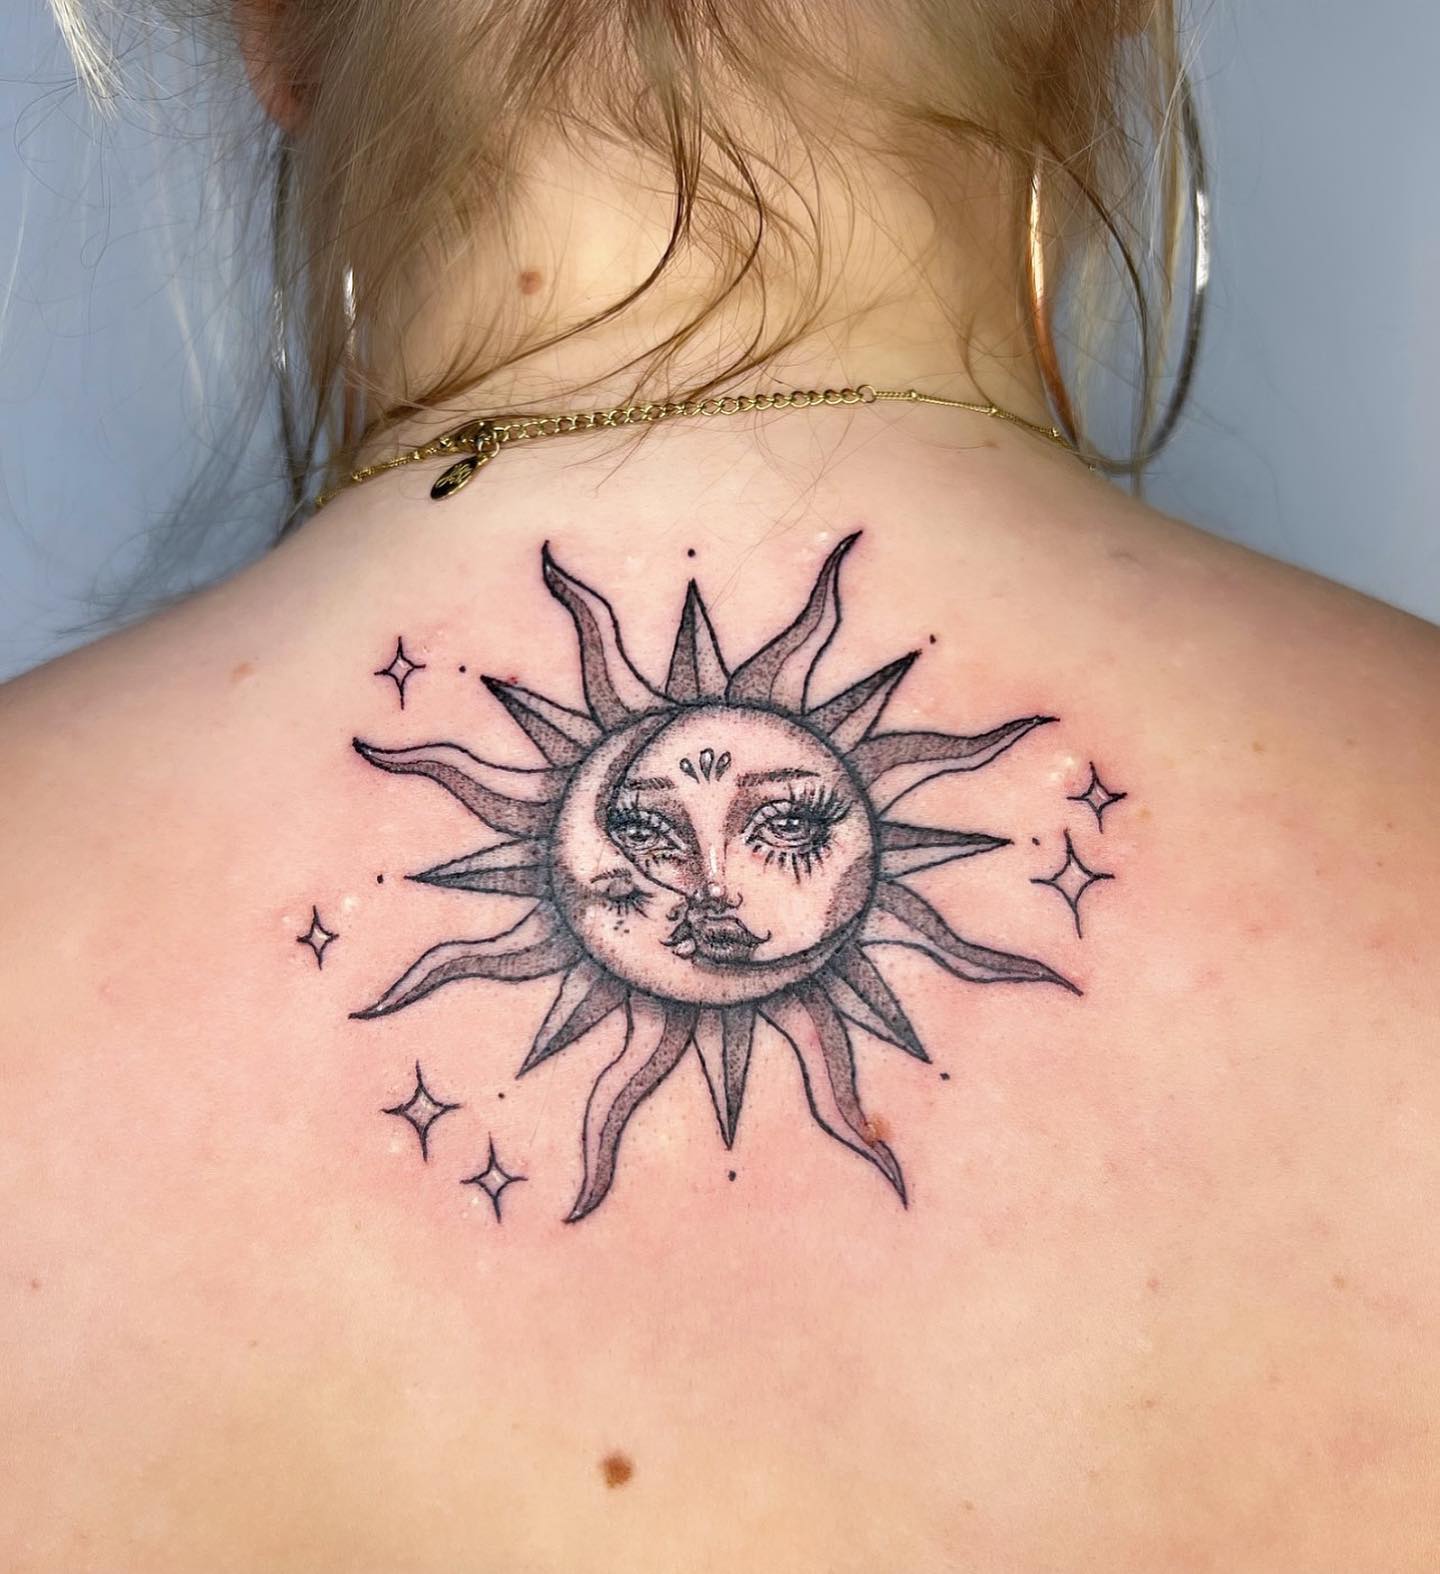 Diseño de tatuaje de sol en la espalda